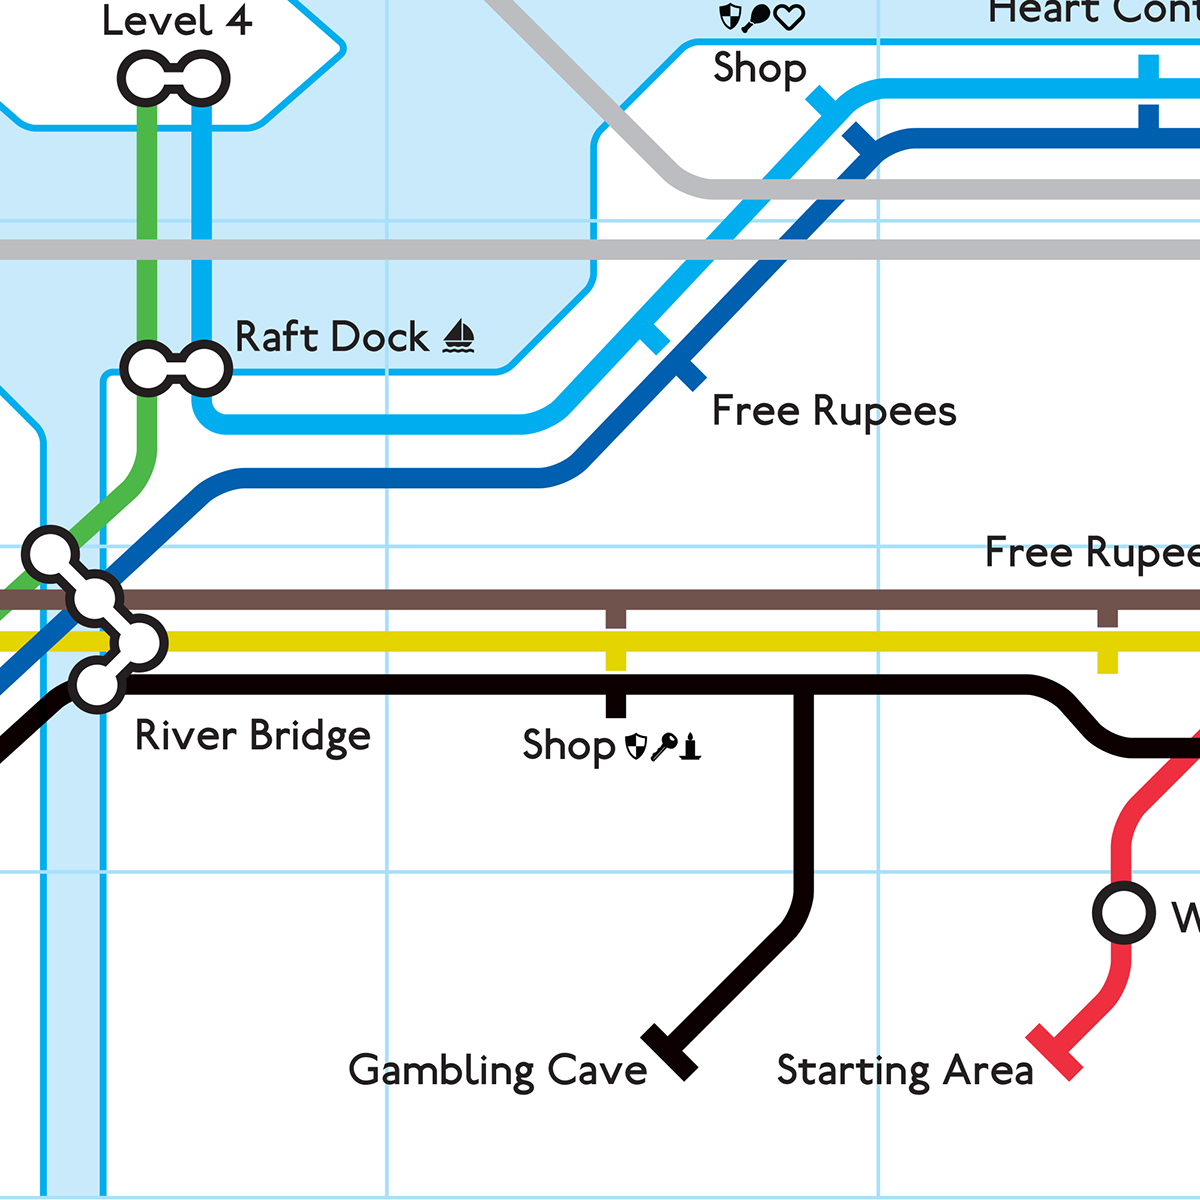 Nintendo subway Transit map NES video game Retro zelda final fantasy metroid metro underground system infographic